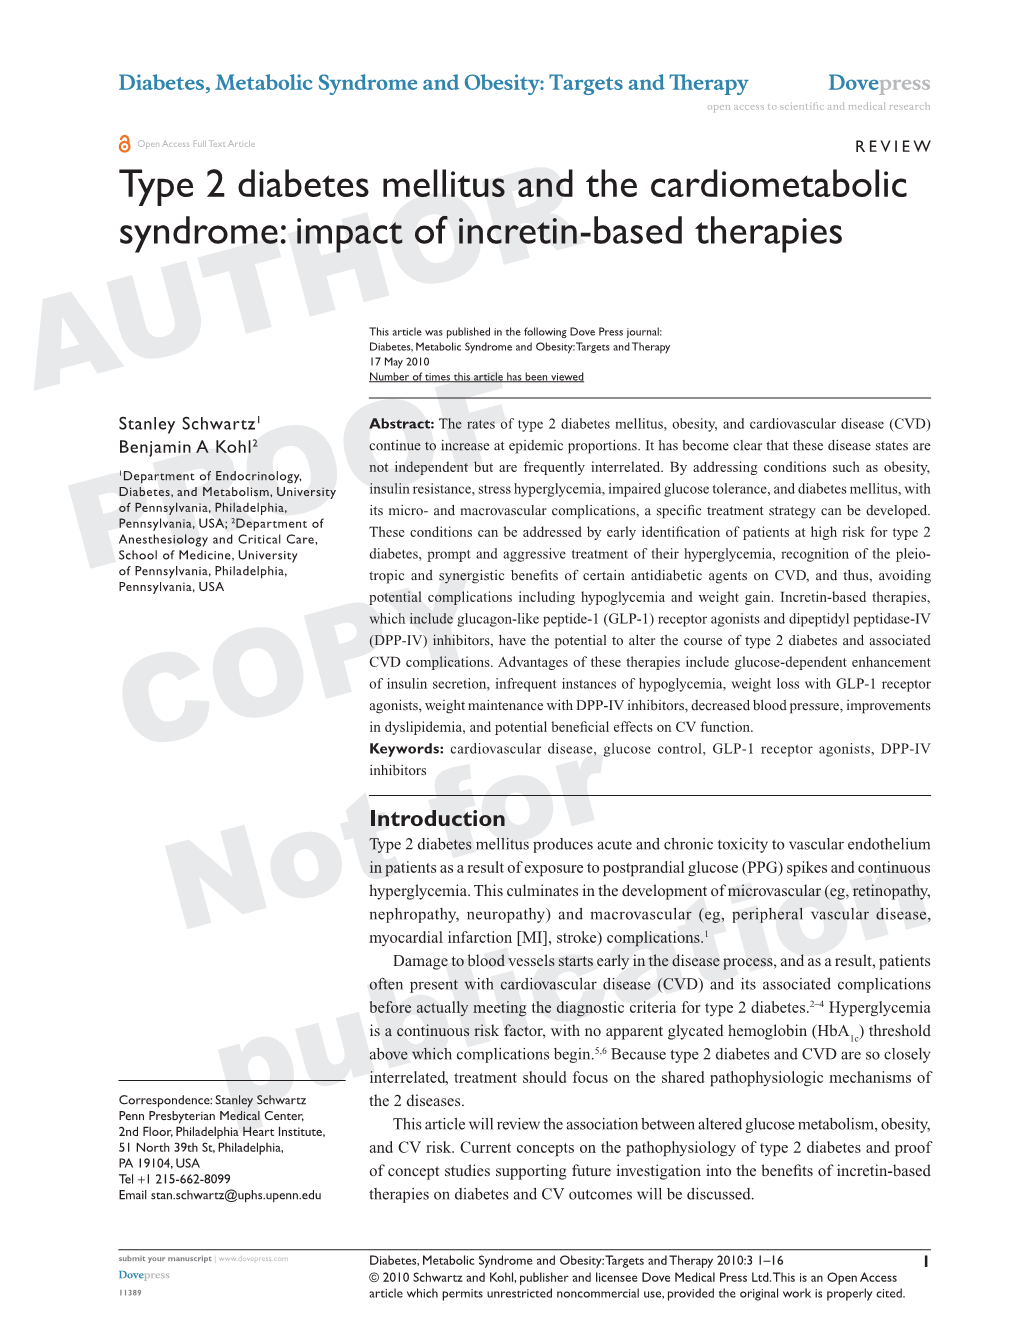 Type 2 Diabetes Mellitus and the Cardiometabolic Syndrome: Impact of Incretin-Based Therapies